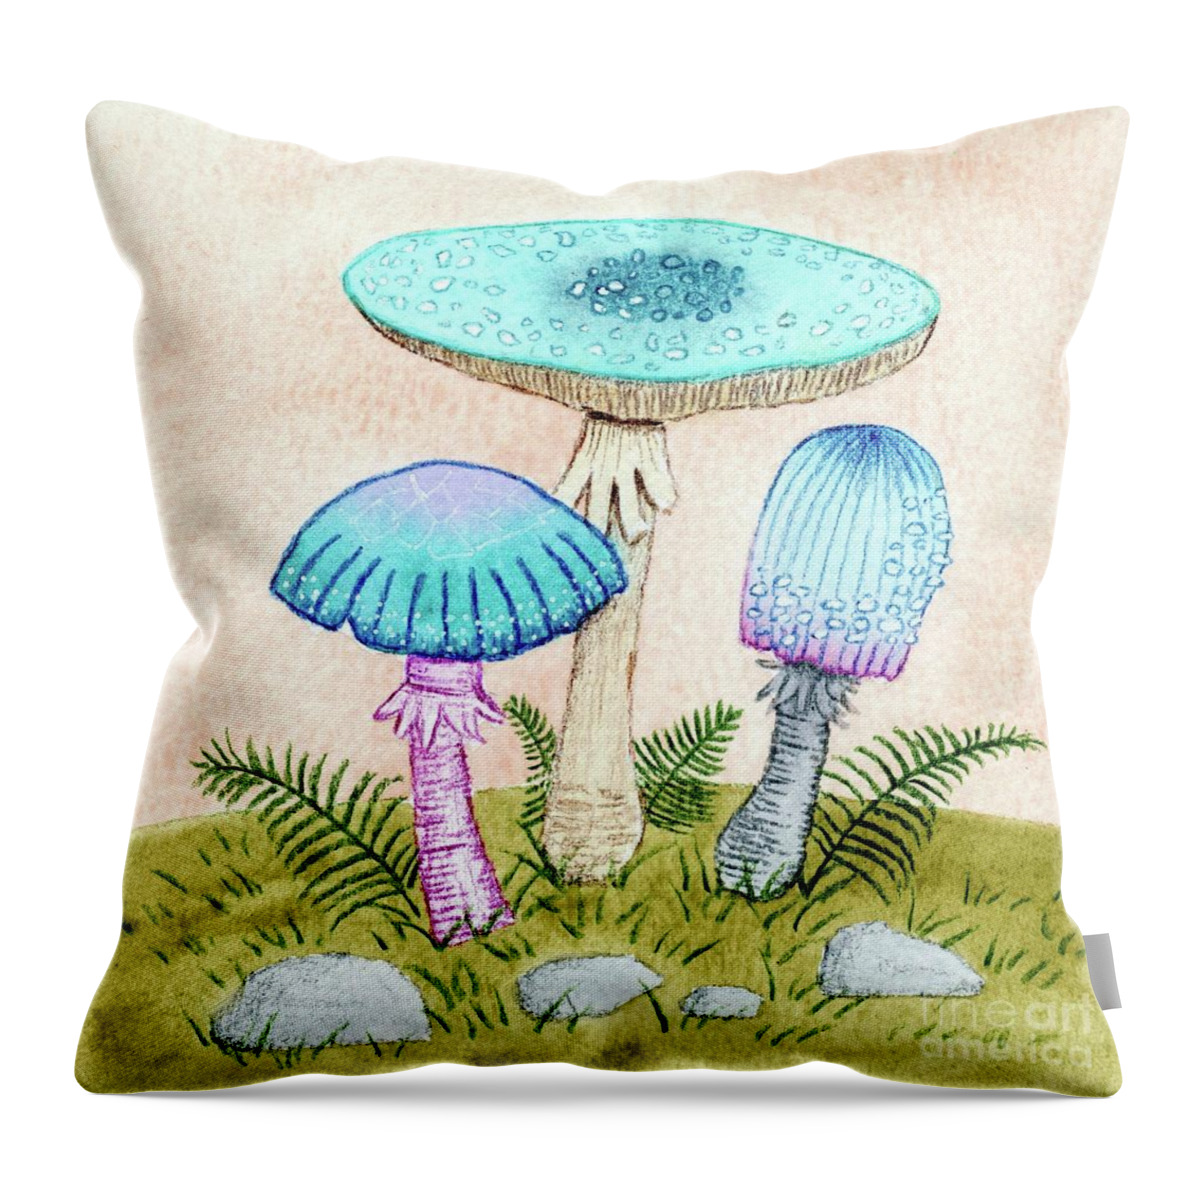 Retro Mushrooms Throw Pillow featuring the painting Retro Mushrooms 2 by Donna Mibus